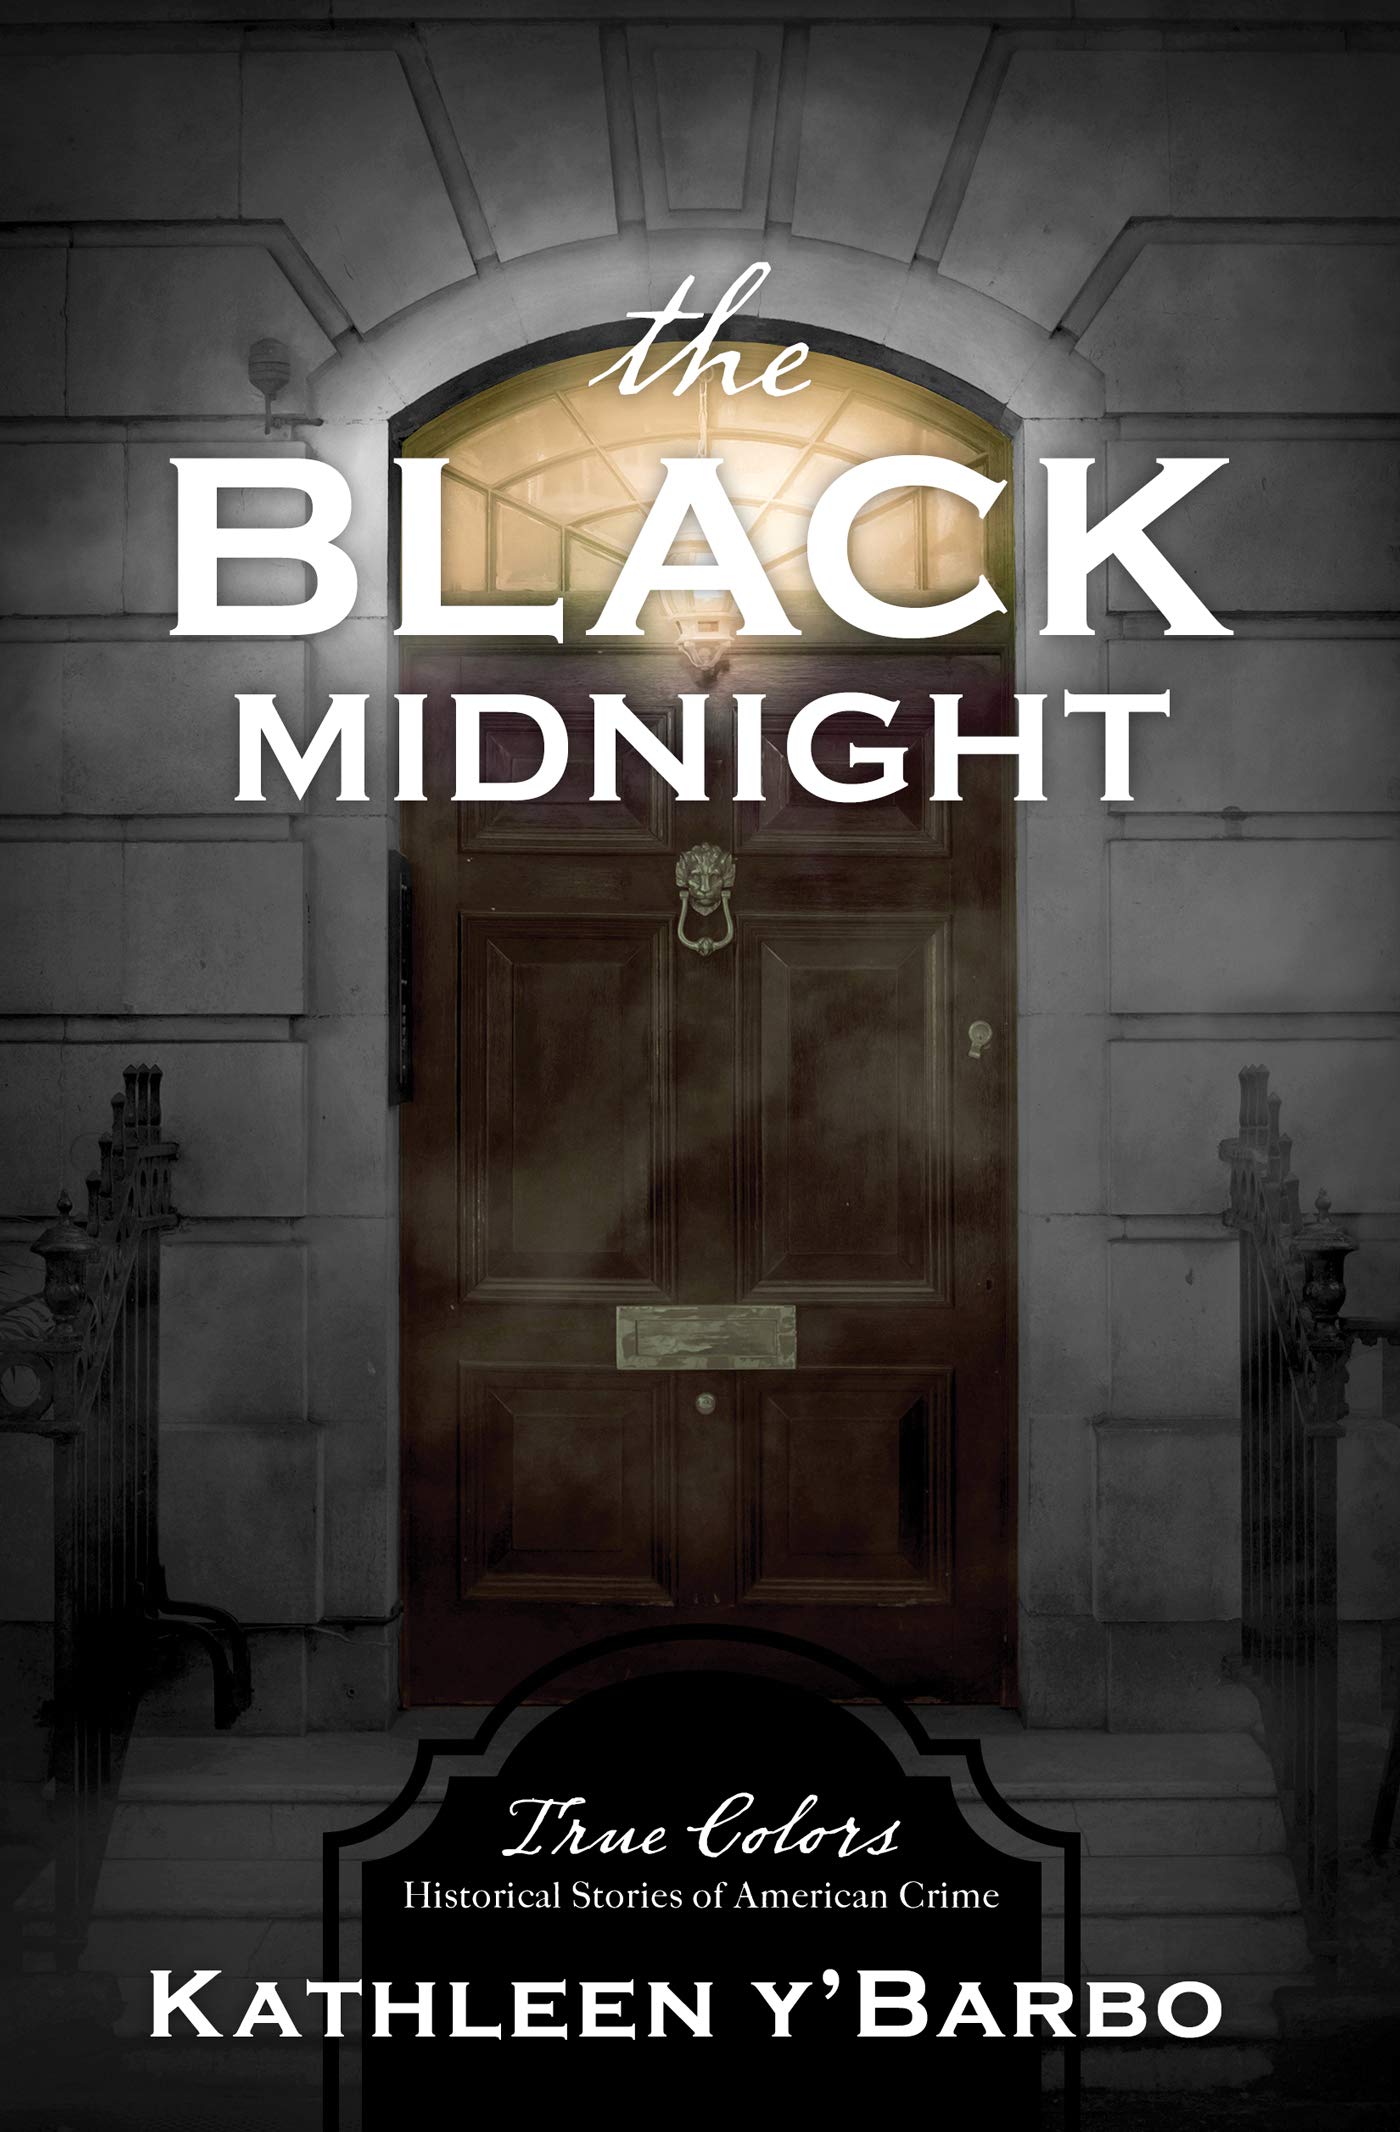 The Black Midnight